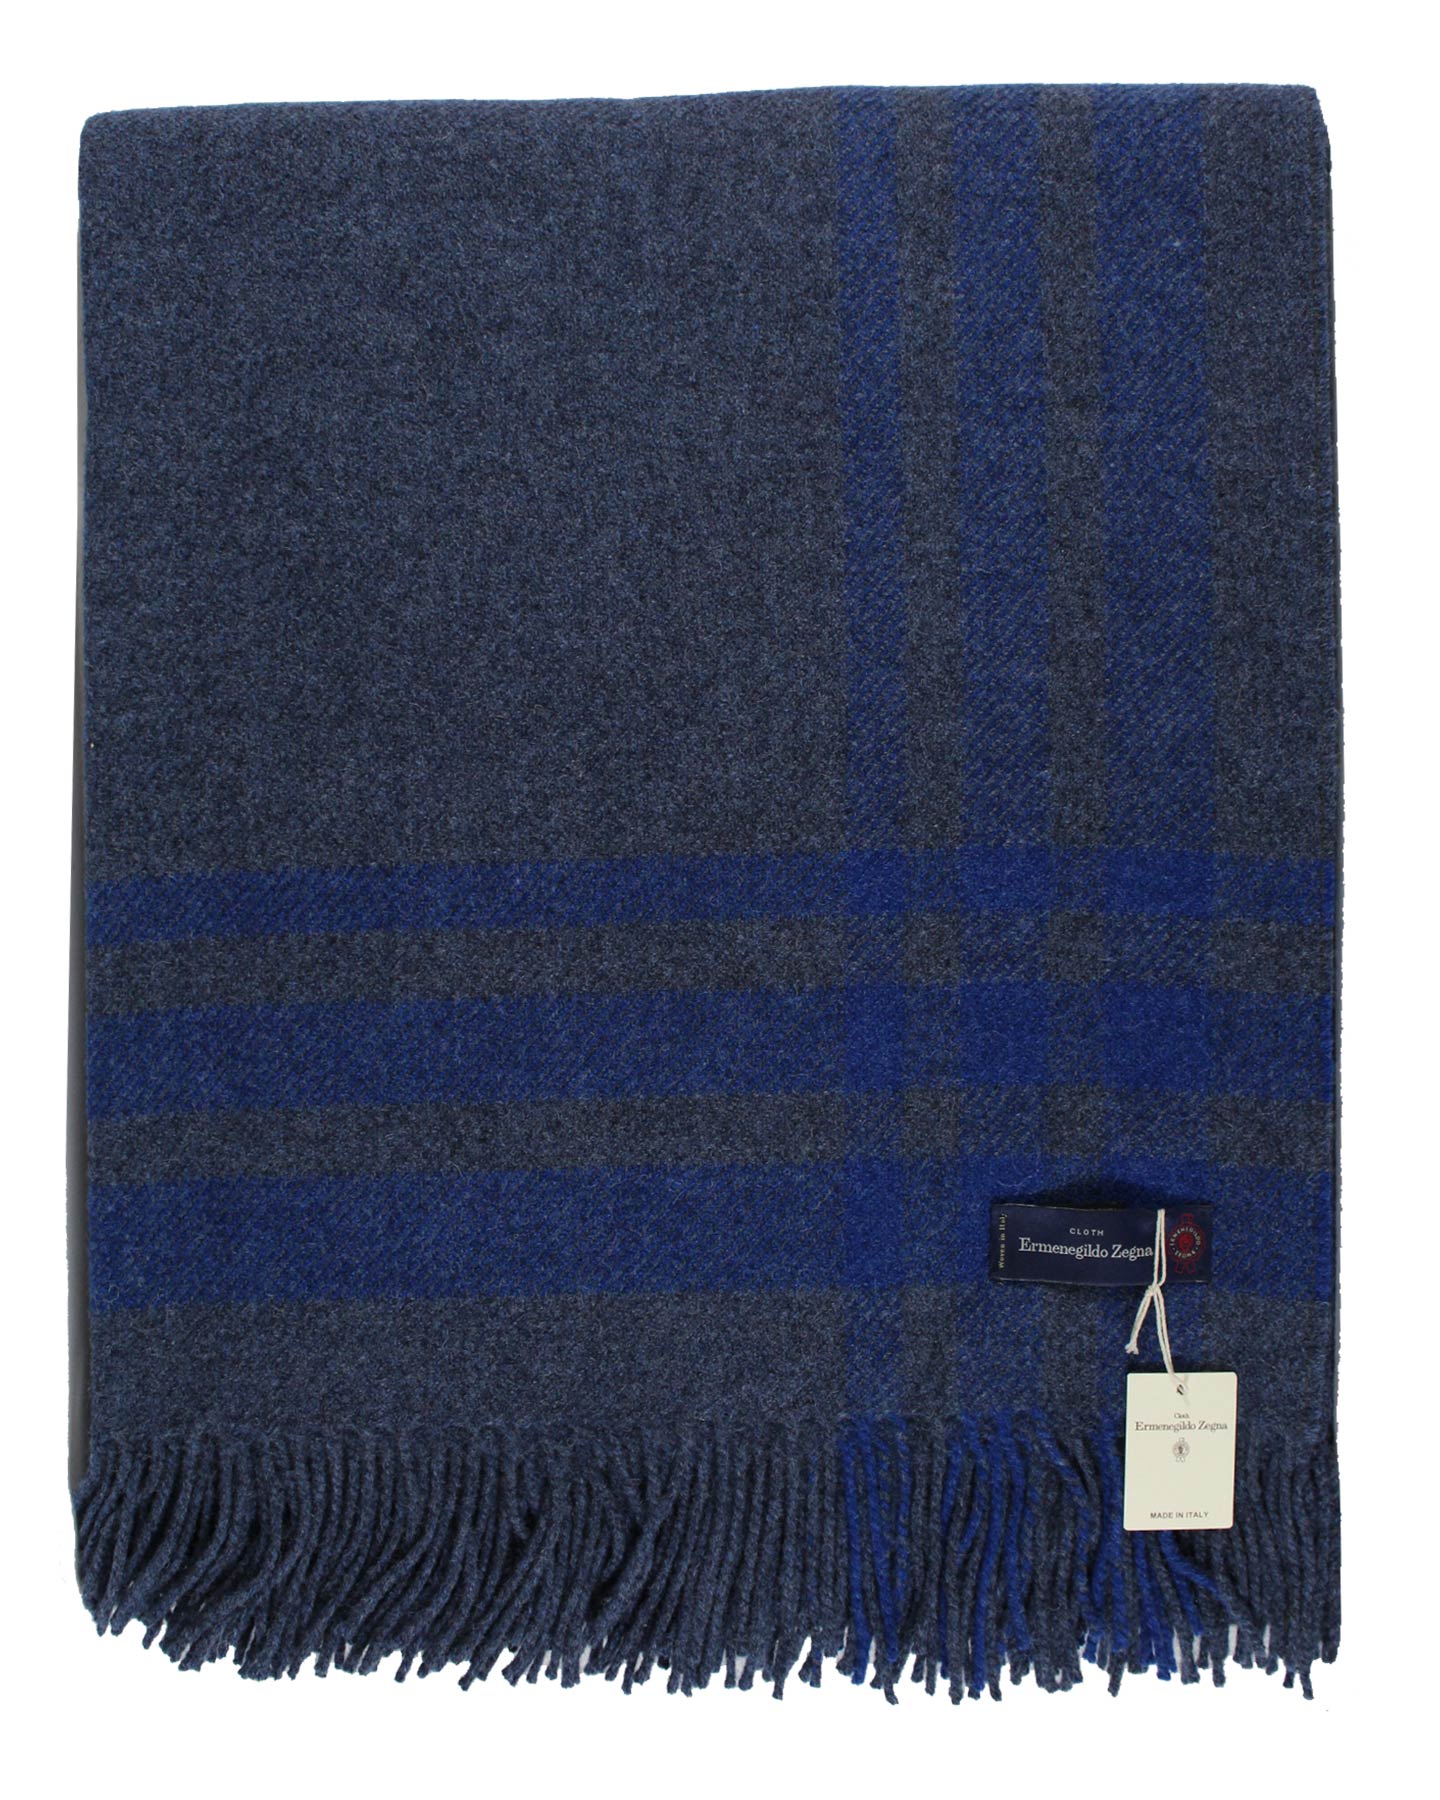 Ermenegildo Zegna Throw Blanket Gray Royal Blue Wool Alpaca Cashmere